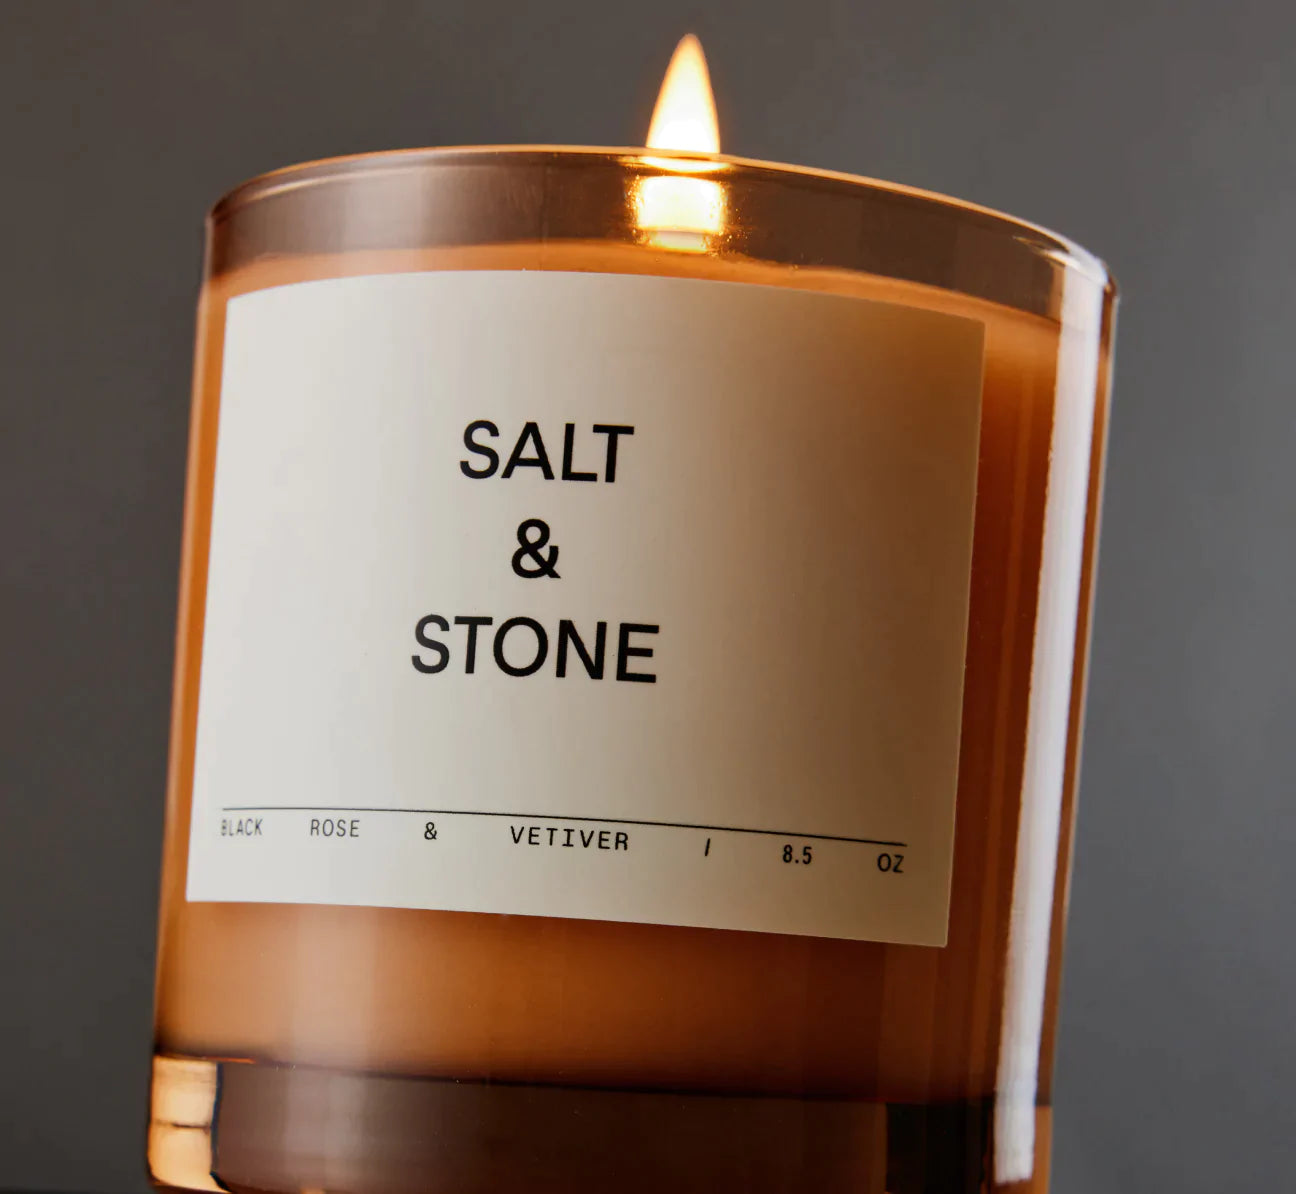 Salt & Stone 8.5oz Candle - Black Rose & Vetive